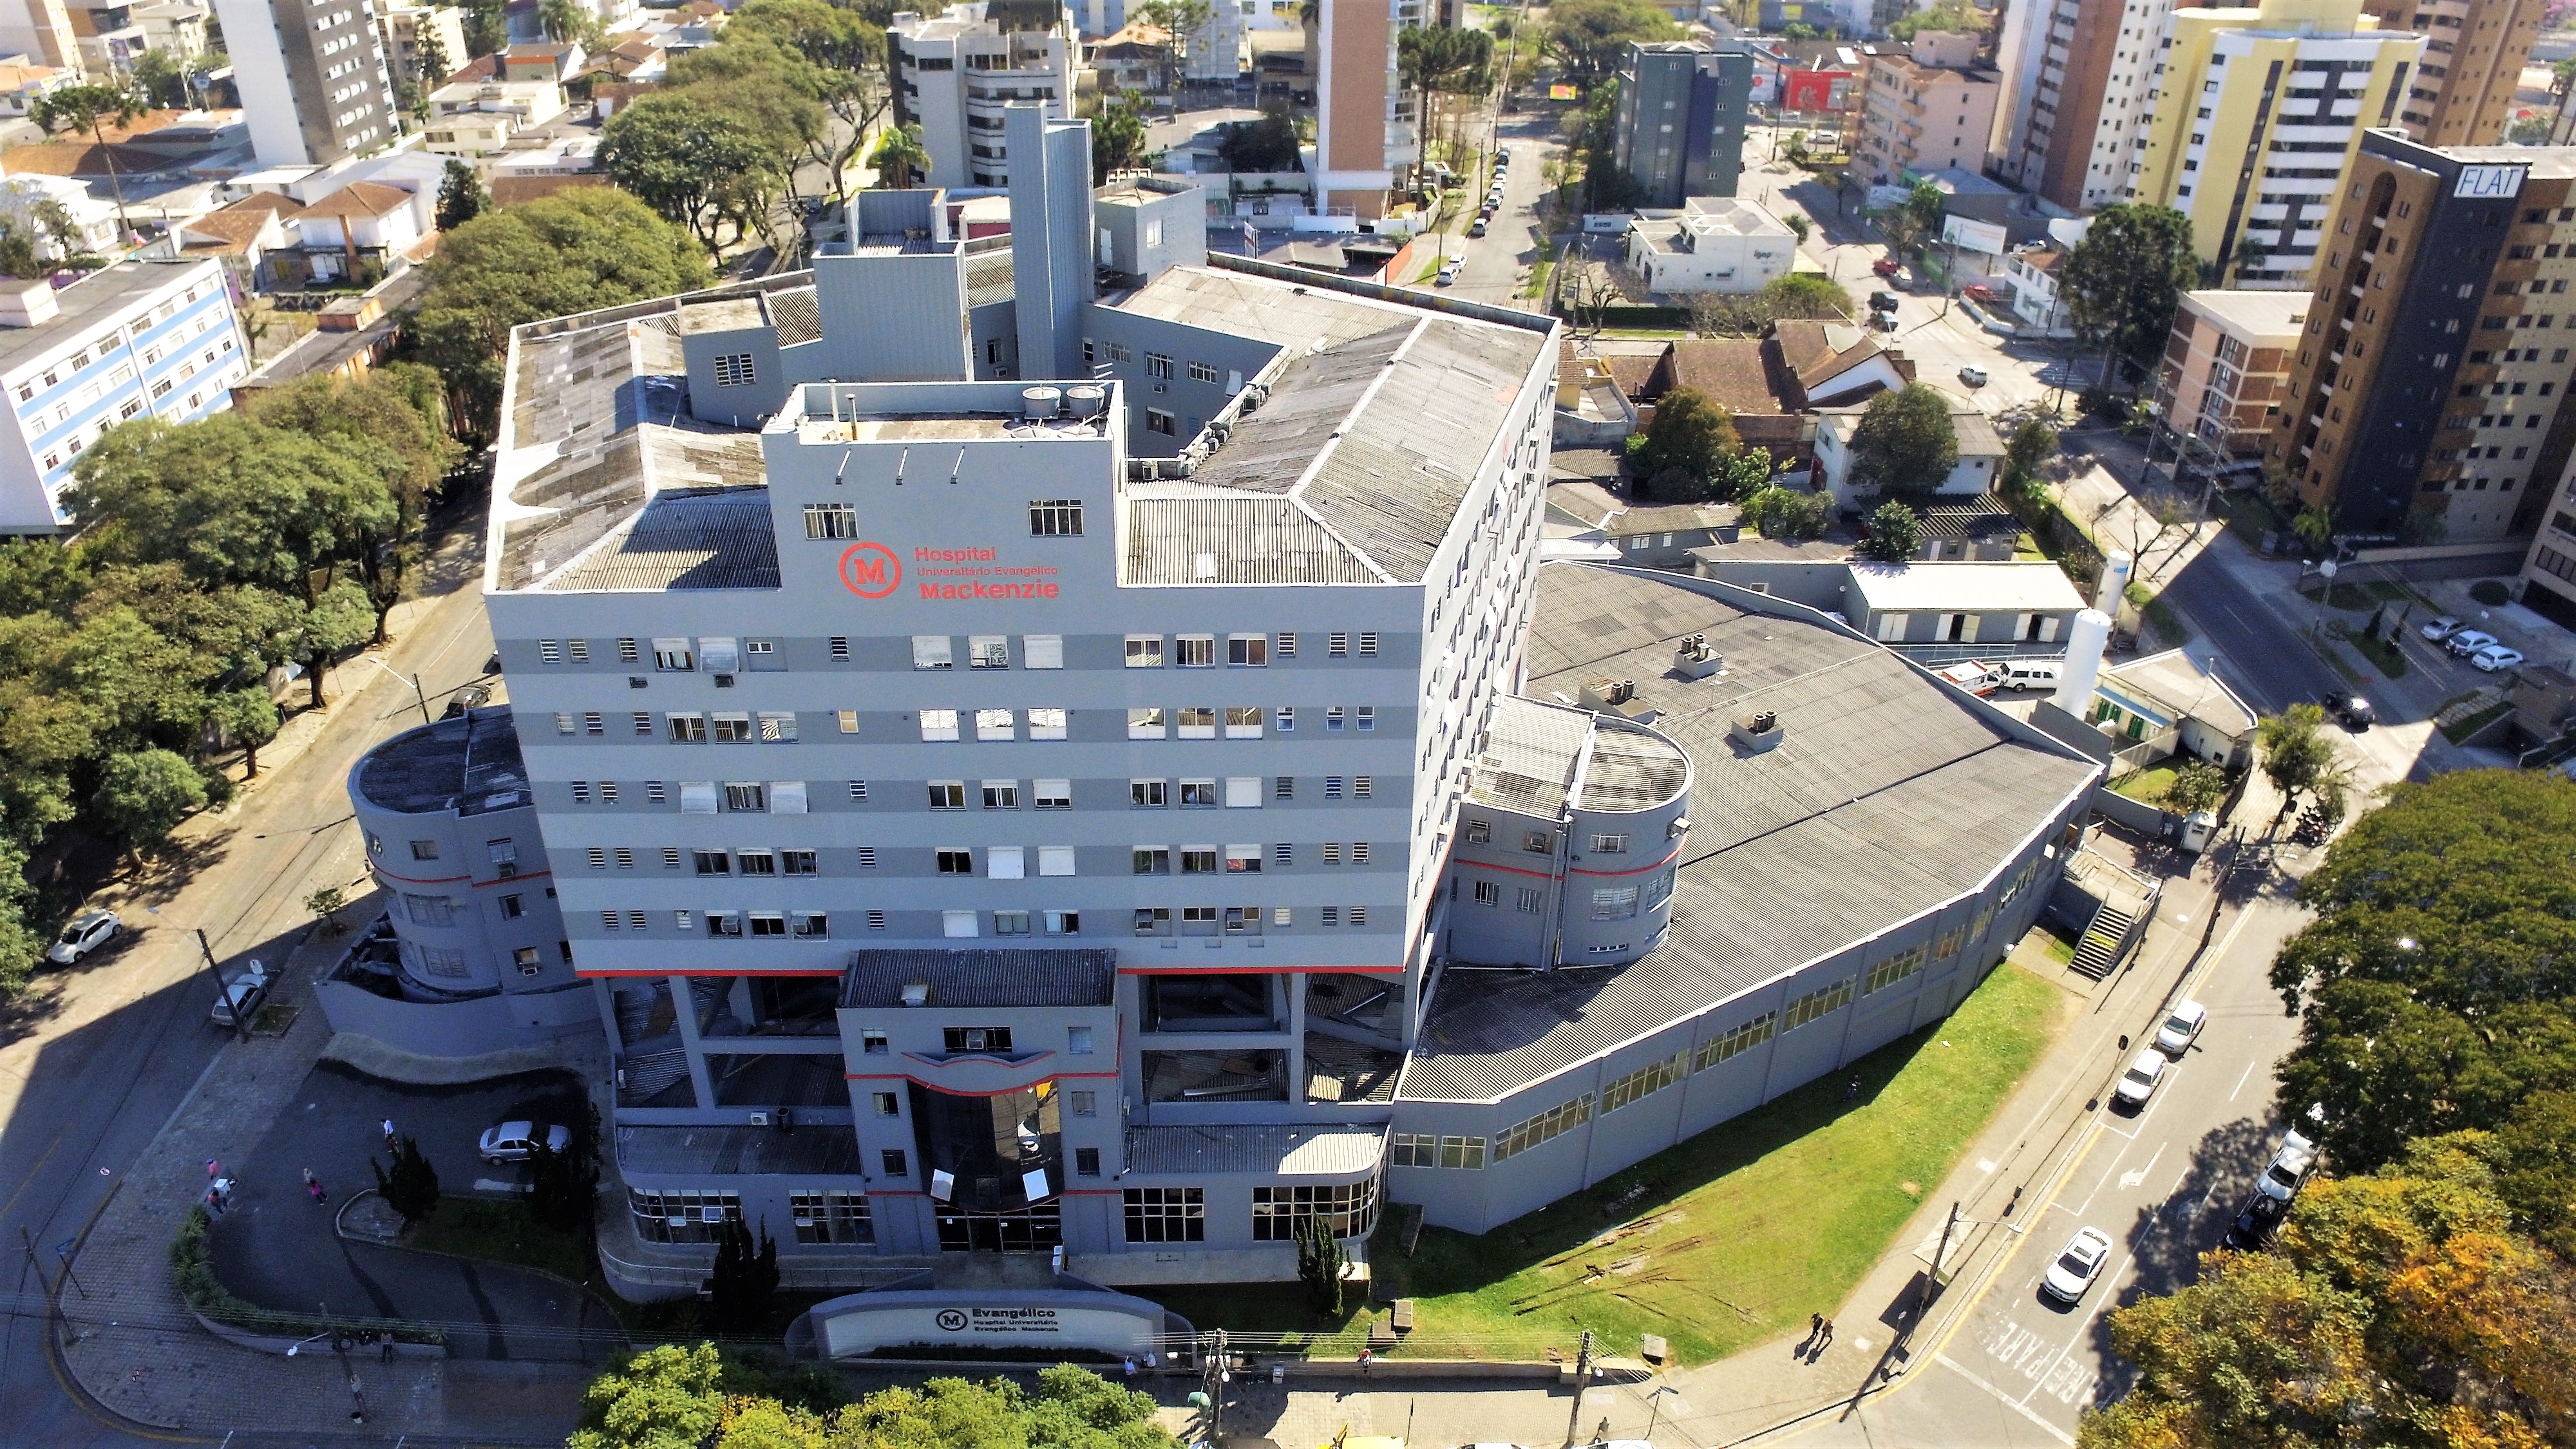 File:Hospital Evangélico de Curitiba.jpg - Wikimedia Commons